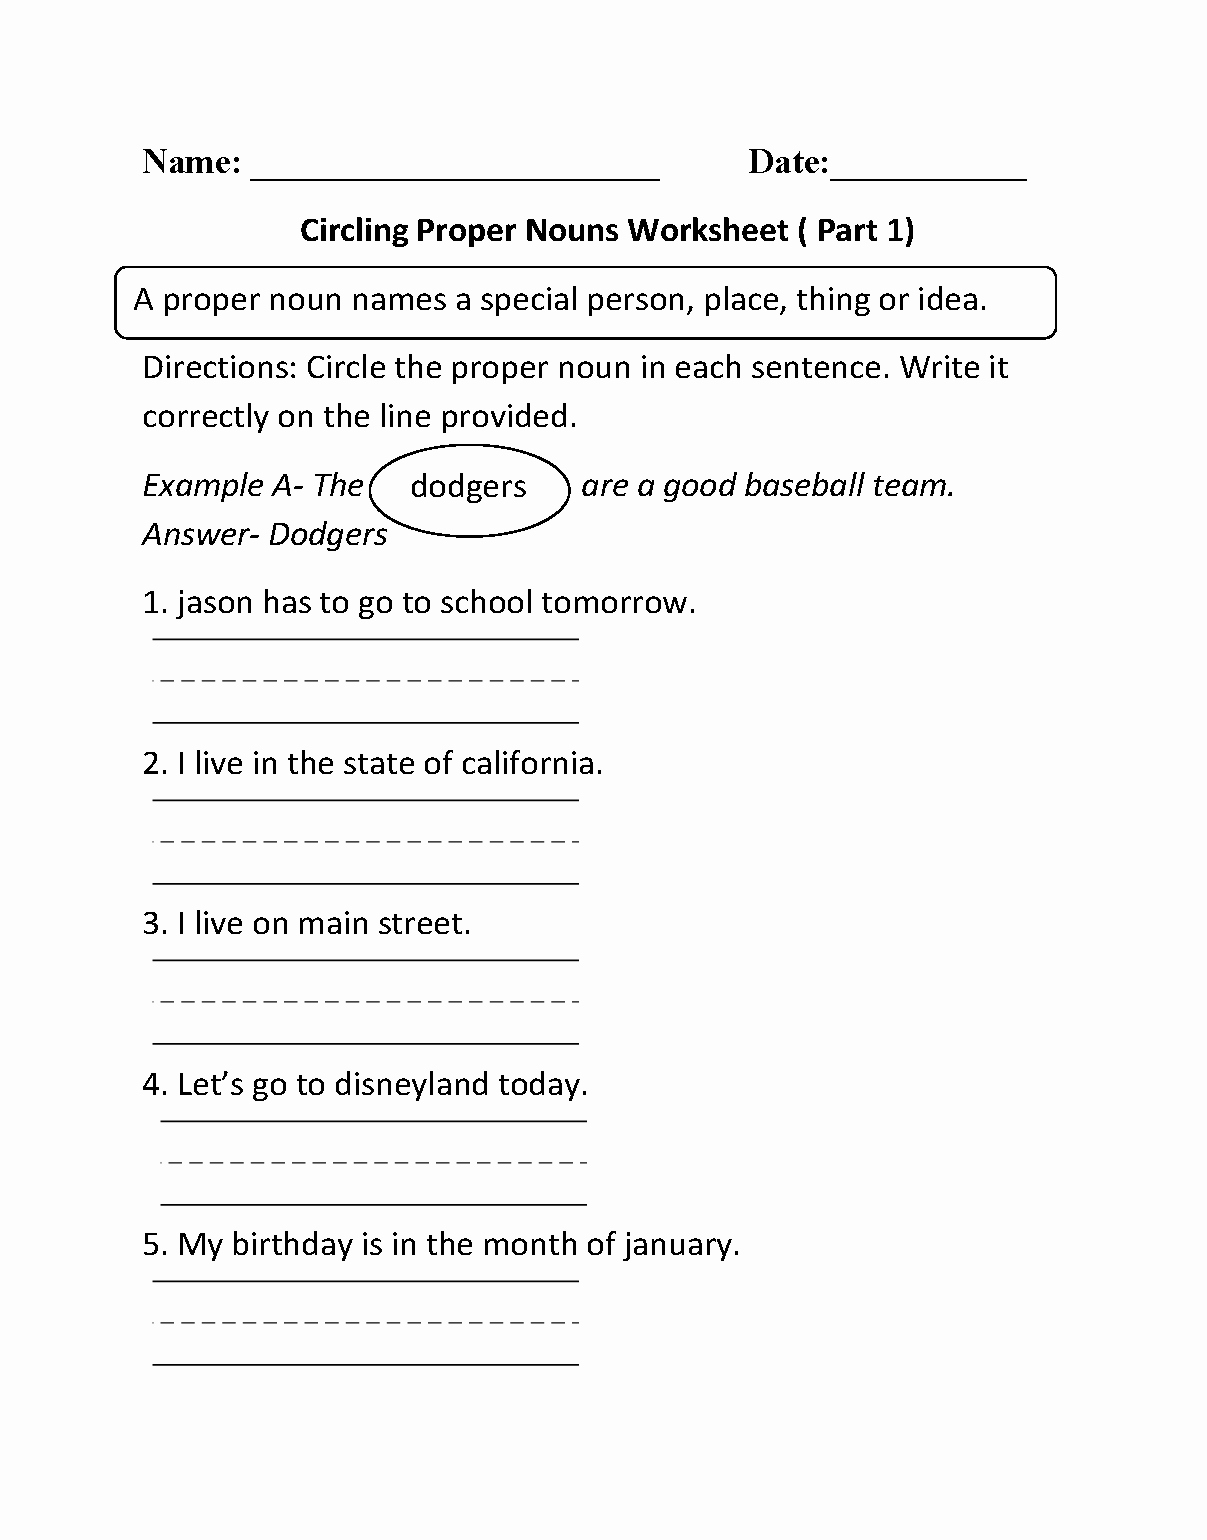 Free Proper Noun Worksheets Awesome Circling Proper Nouns Worksheet Part 1